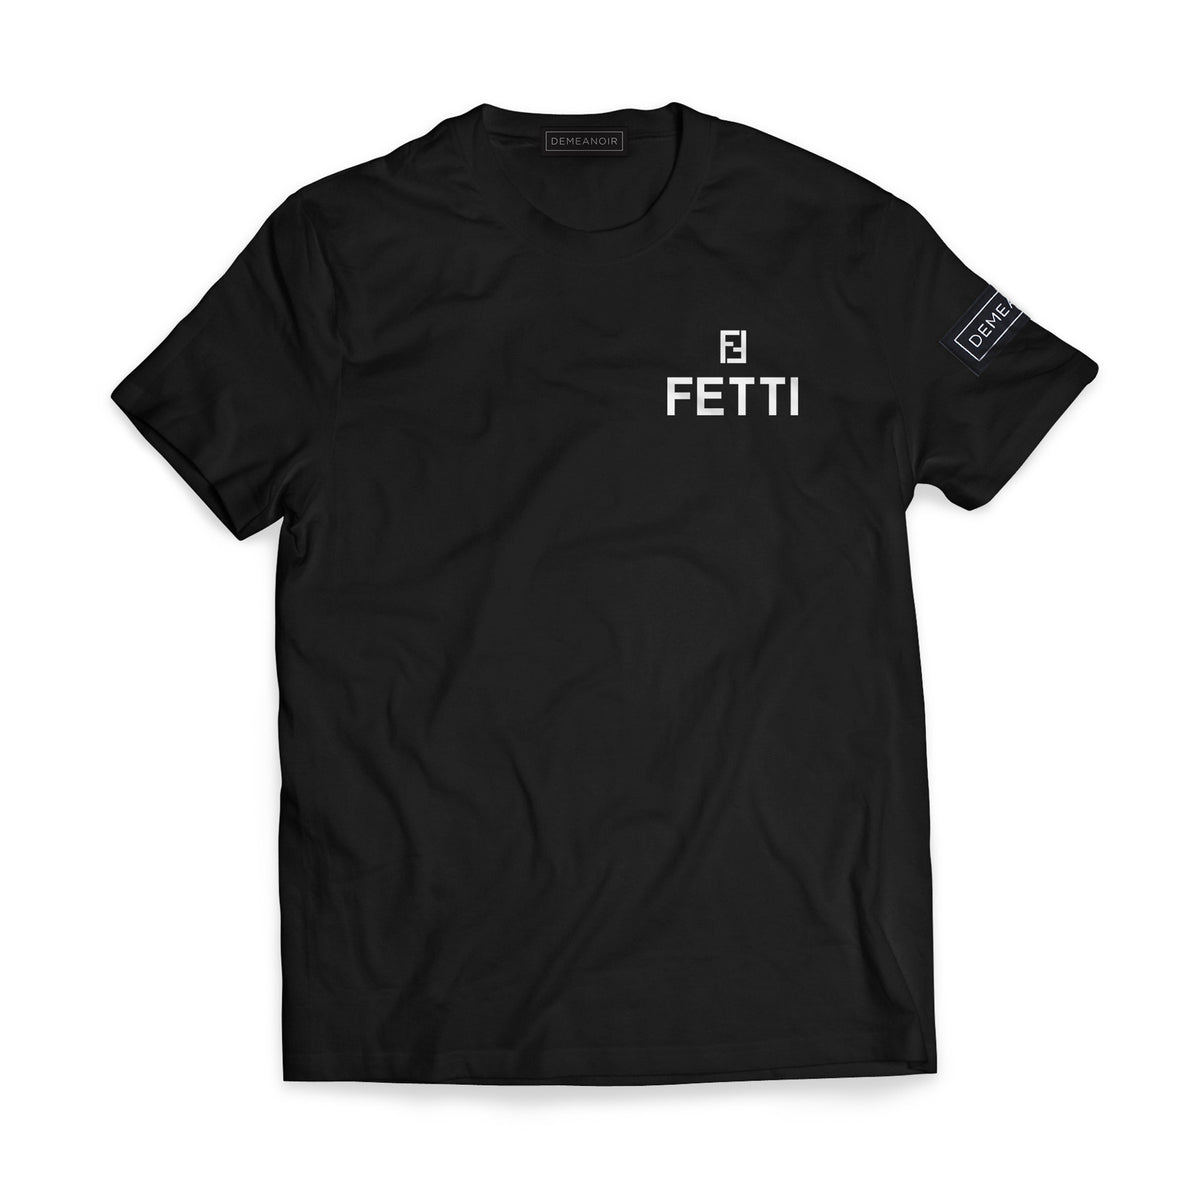 Fetti T-Shirt - DEMEANOIR - 1